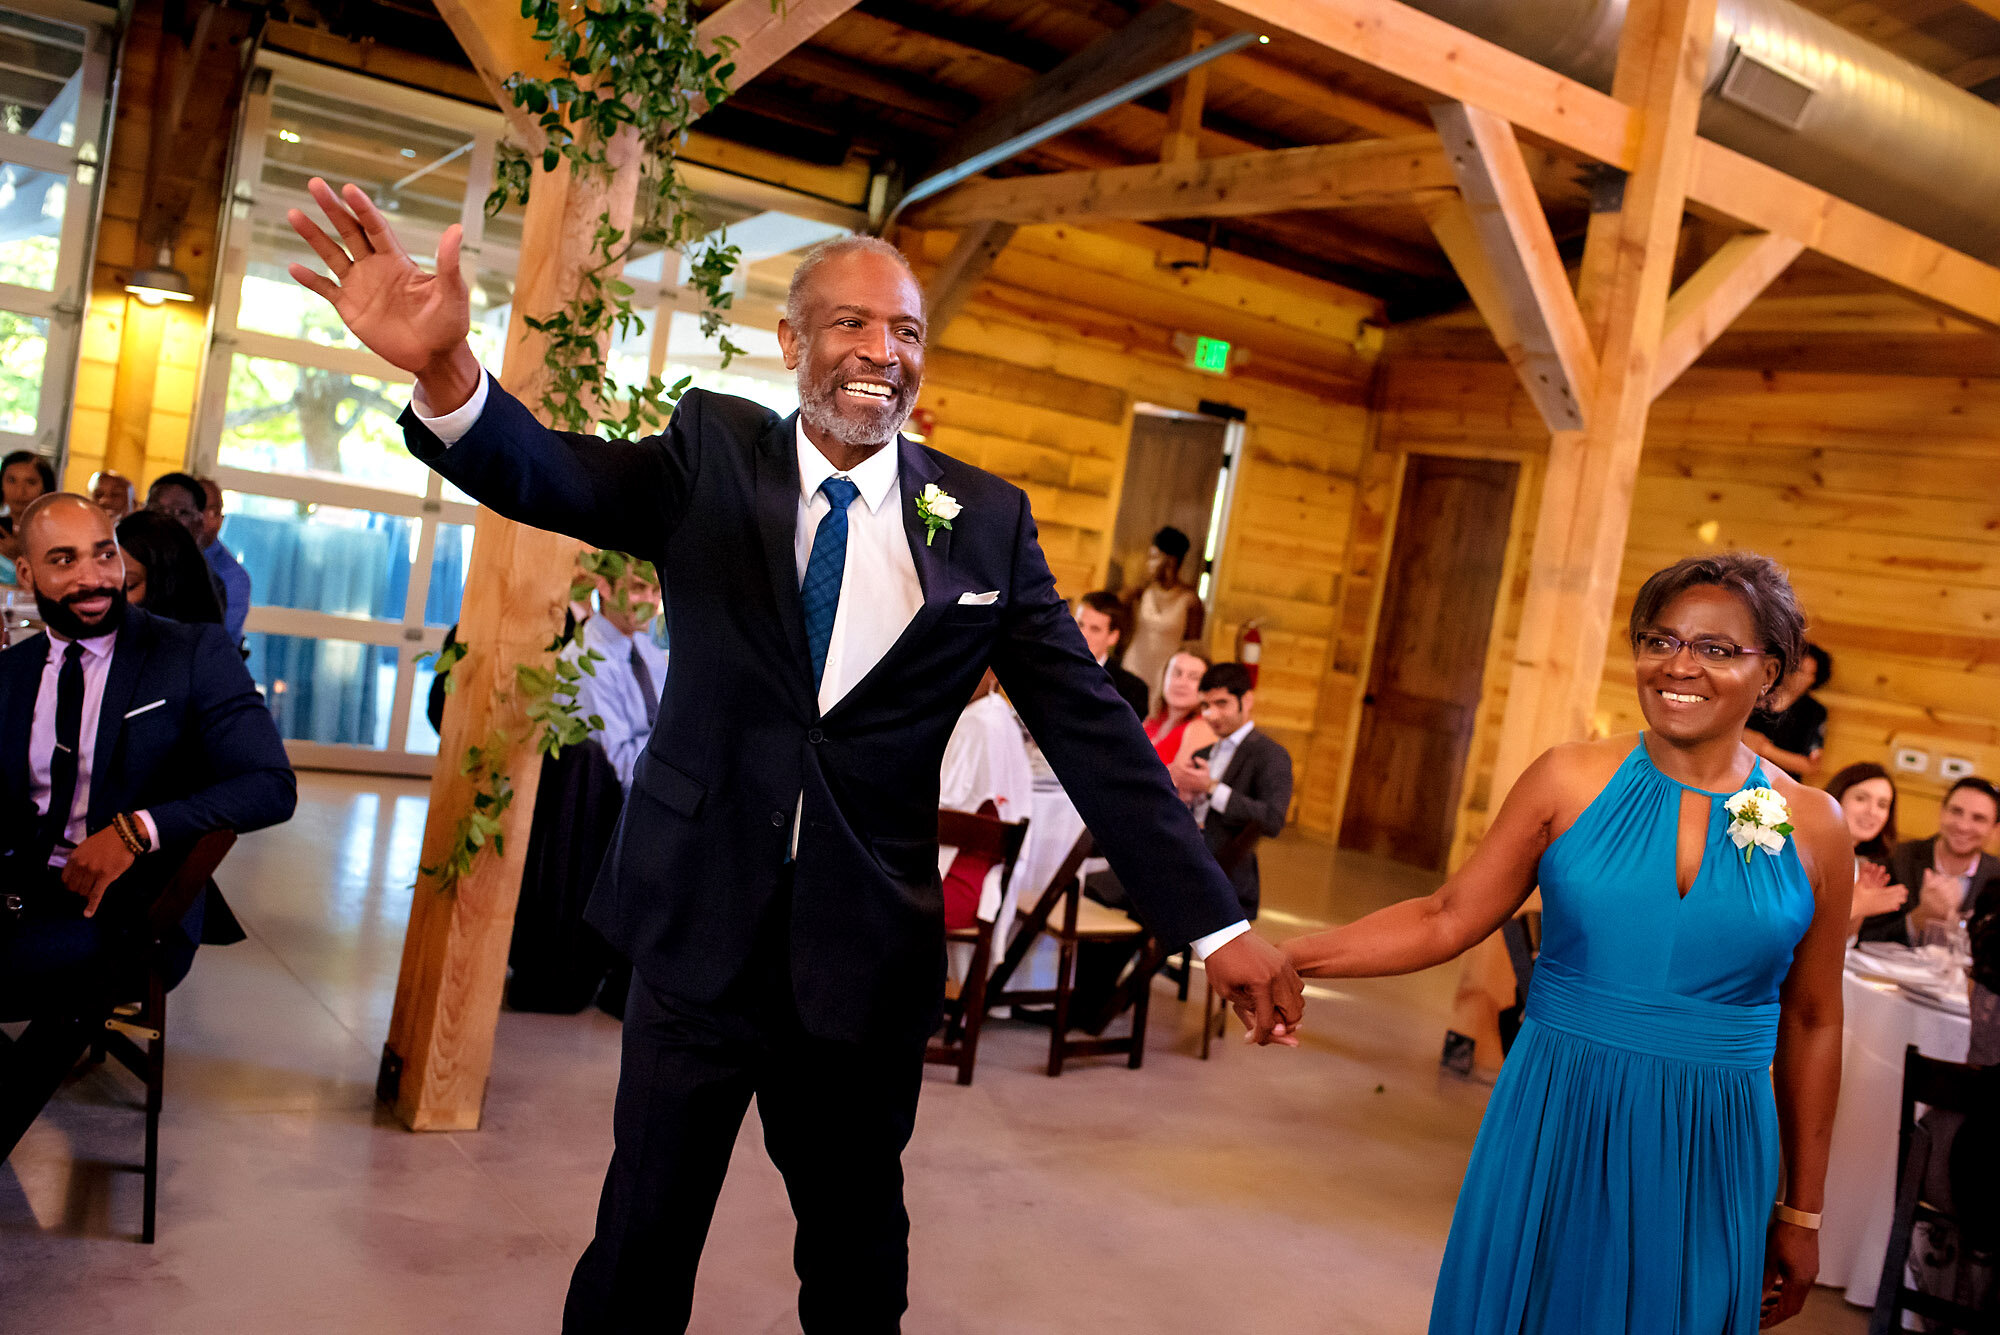 39-Austin-wedding-photographer-Jide-Alakija-grooms parents dancing into reception.jpg.JPG